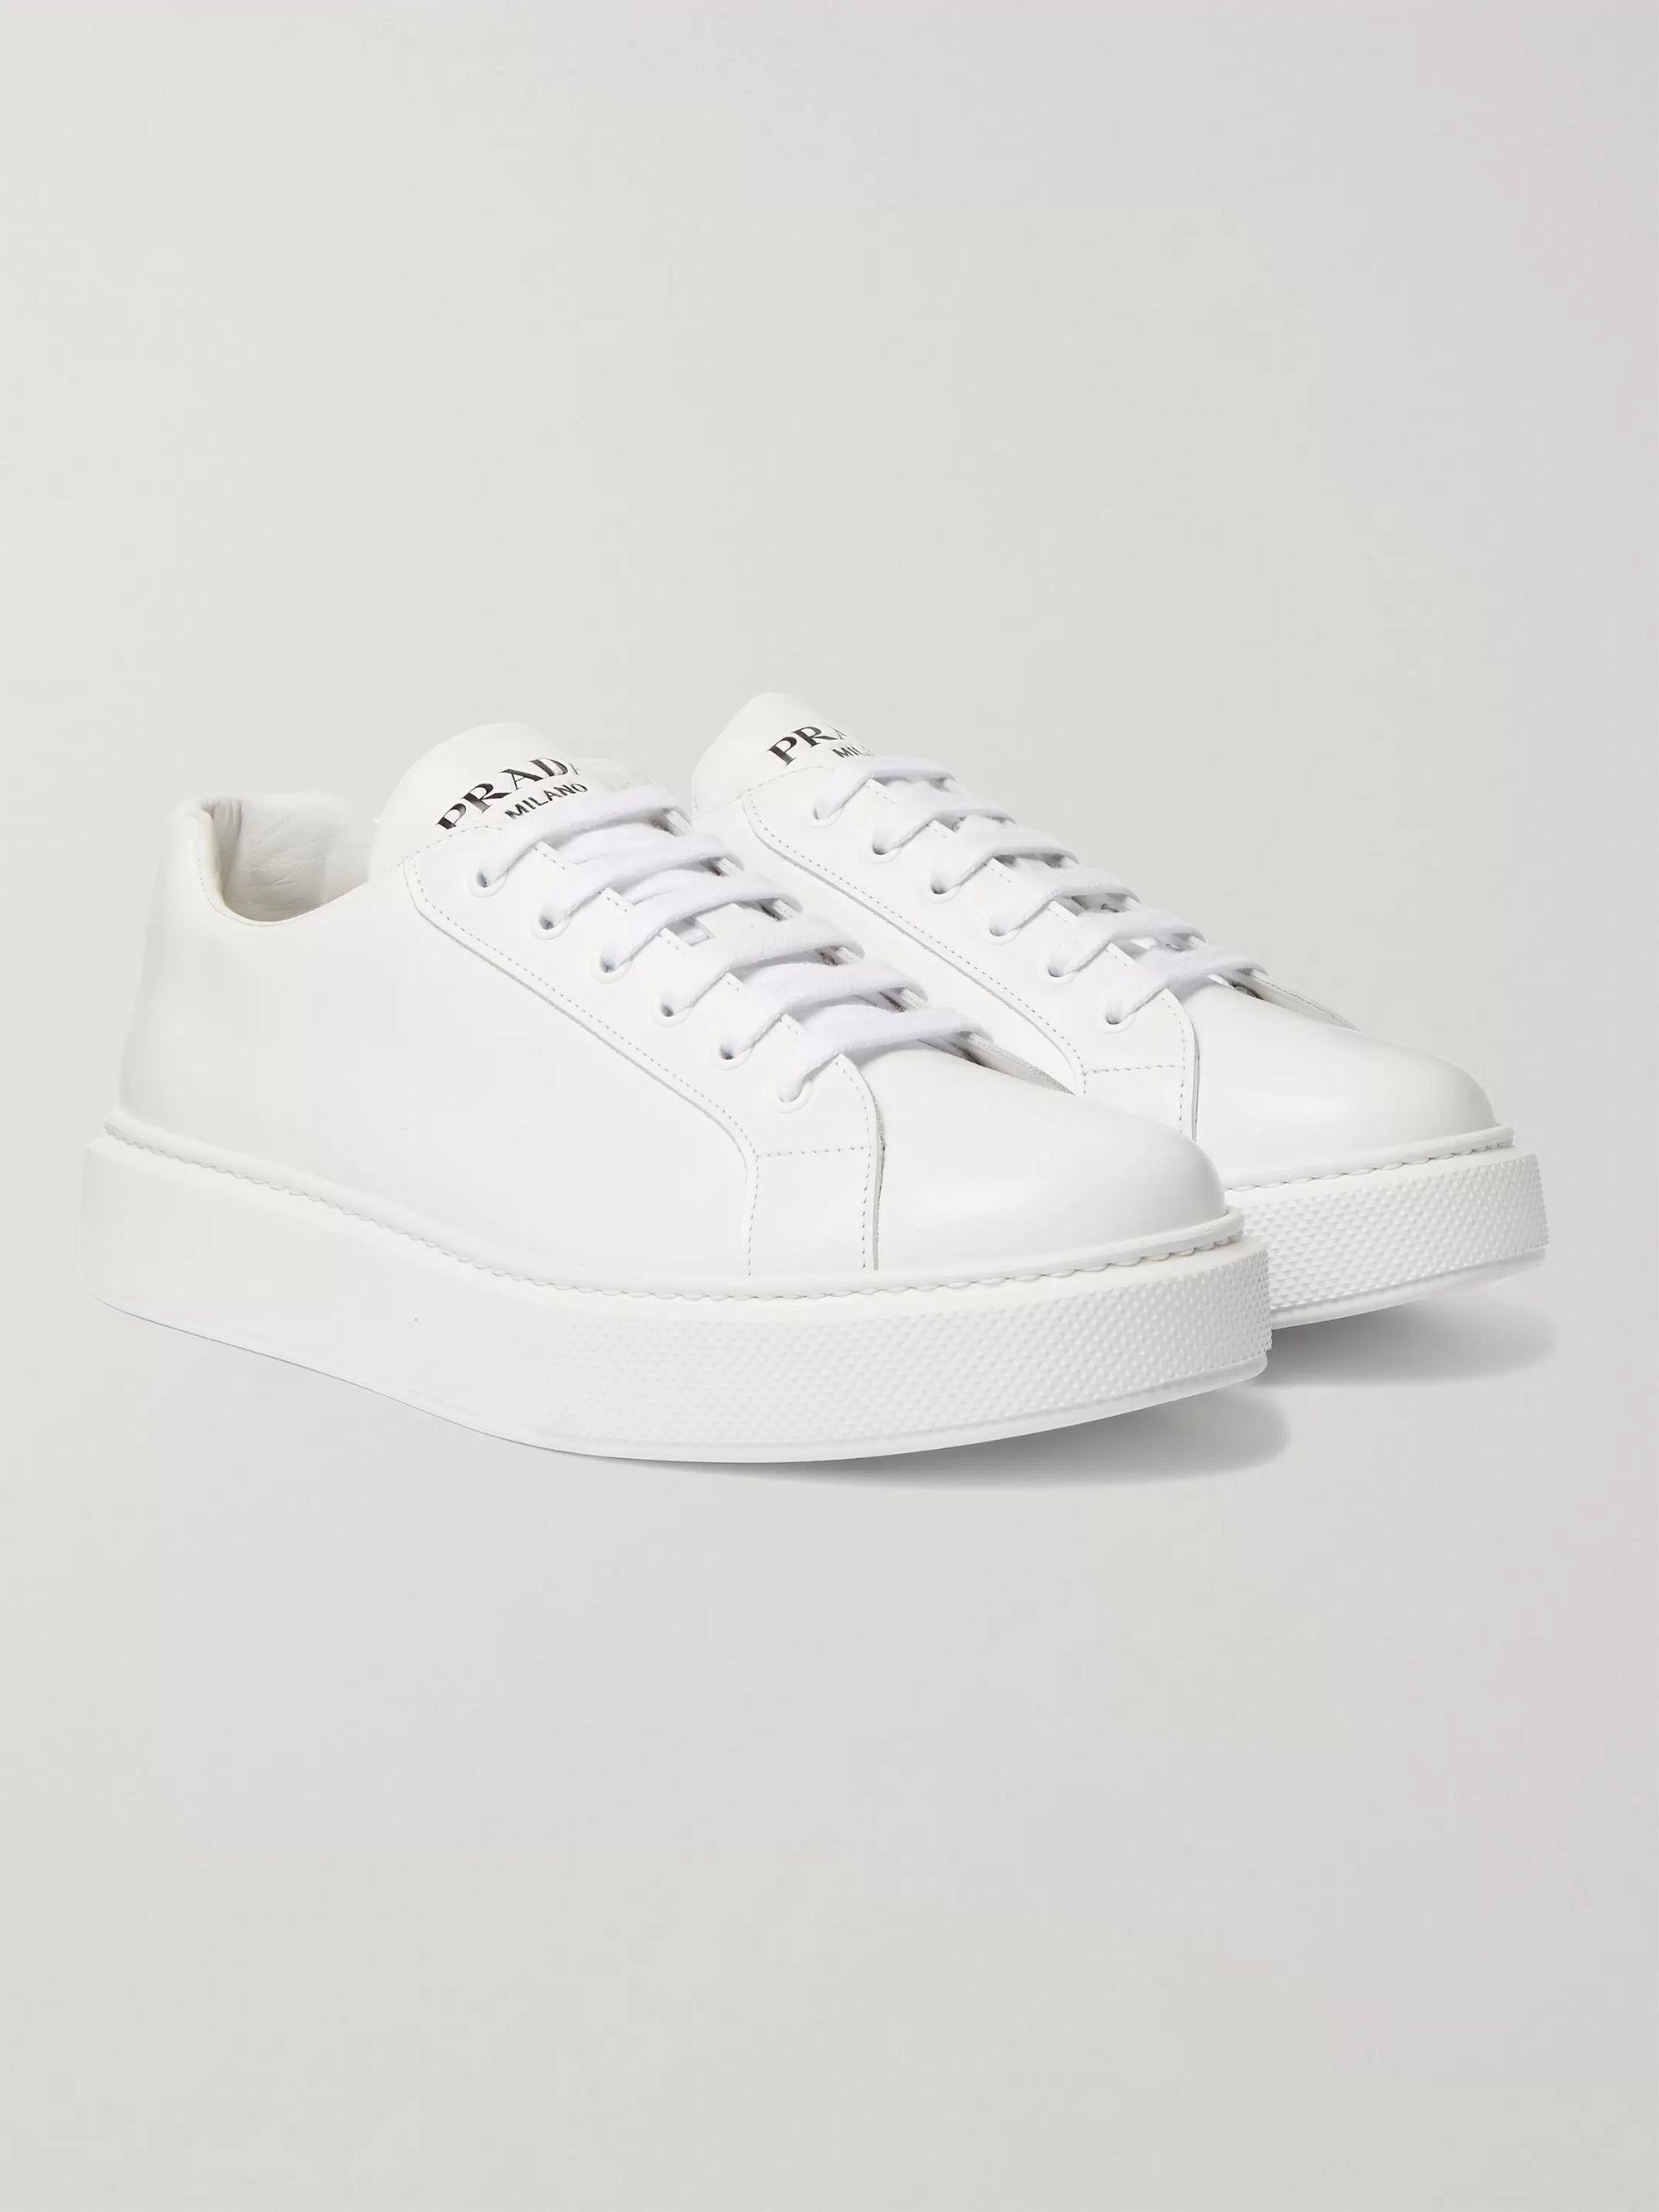 prada white shoes